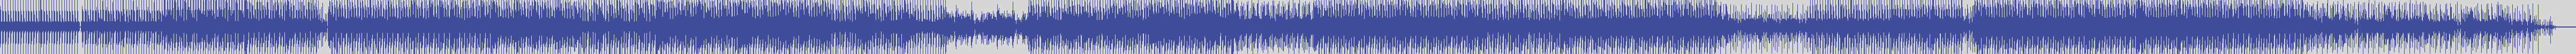 atomic_recordings [AR008] Trixy T - Birthday [Original Mix] audio wave form